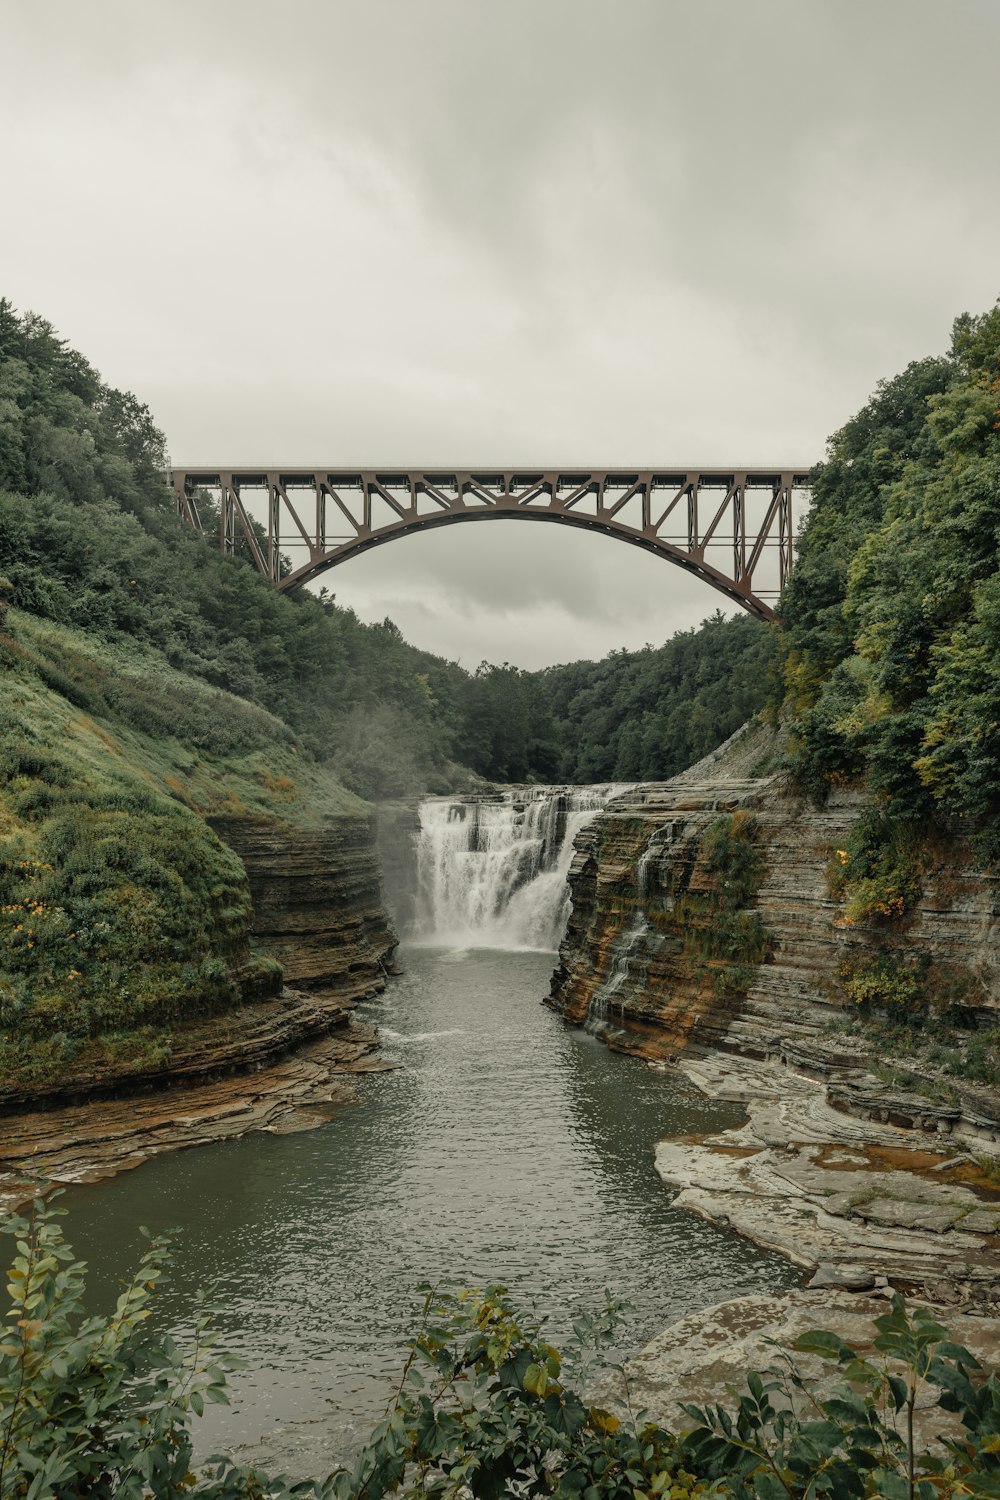 water falls under gray bridge